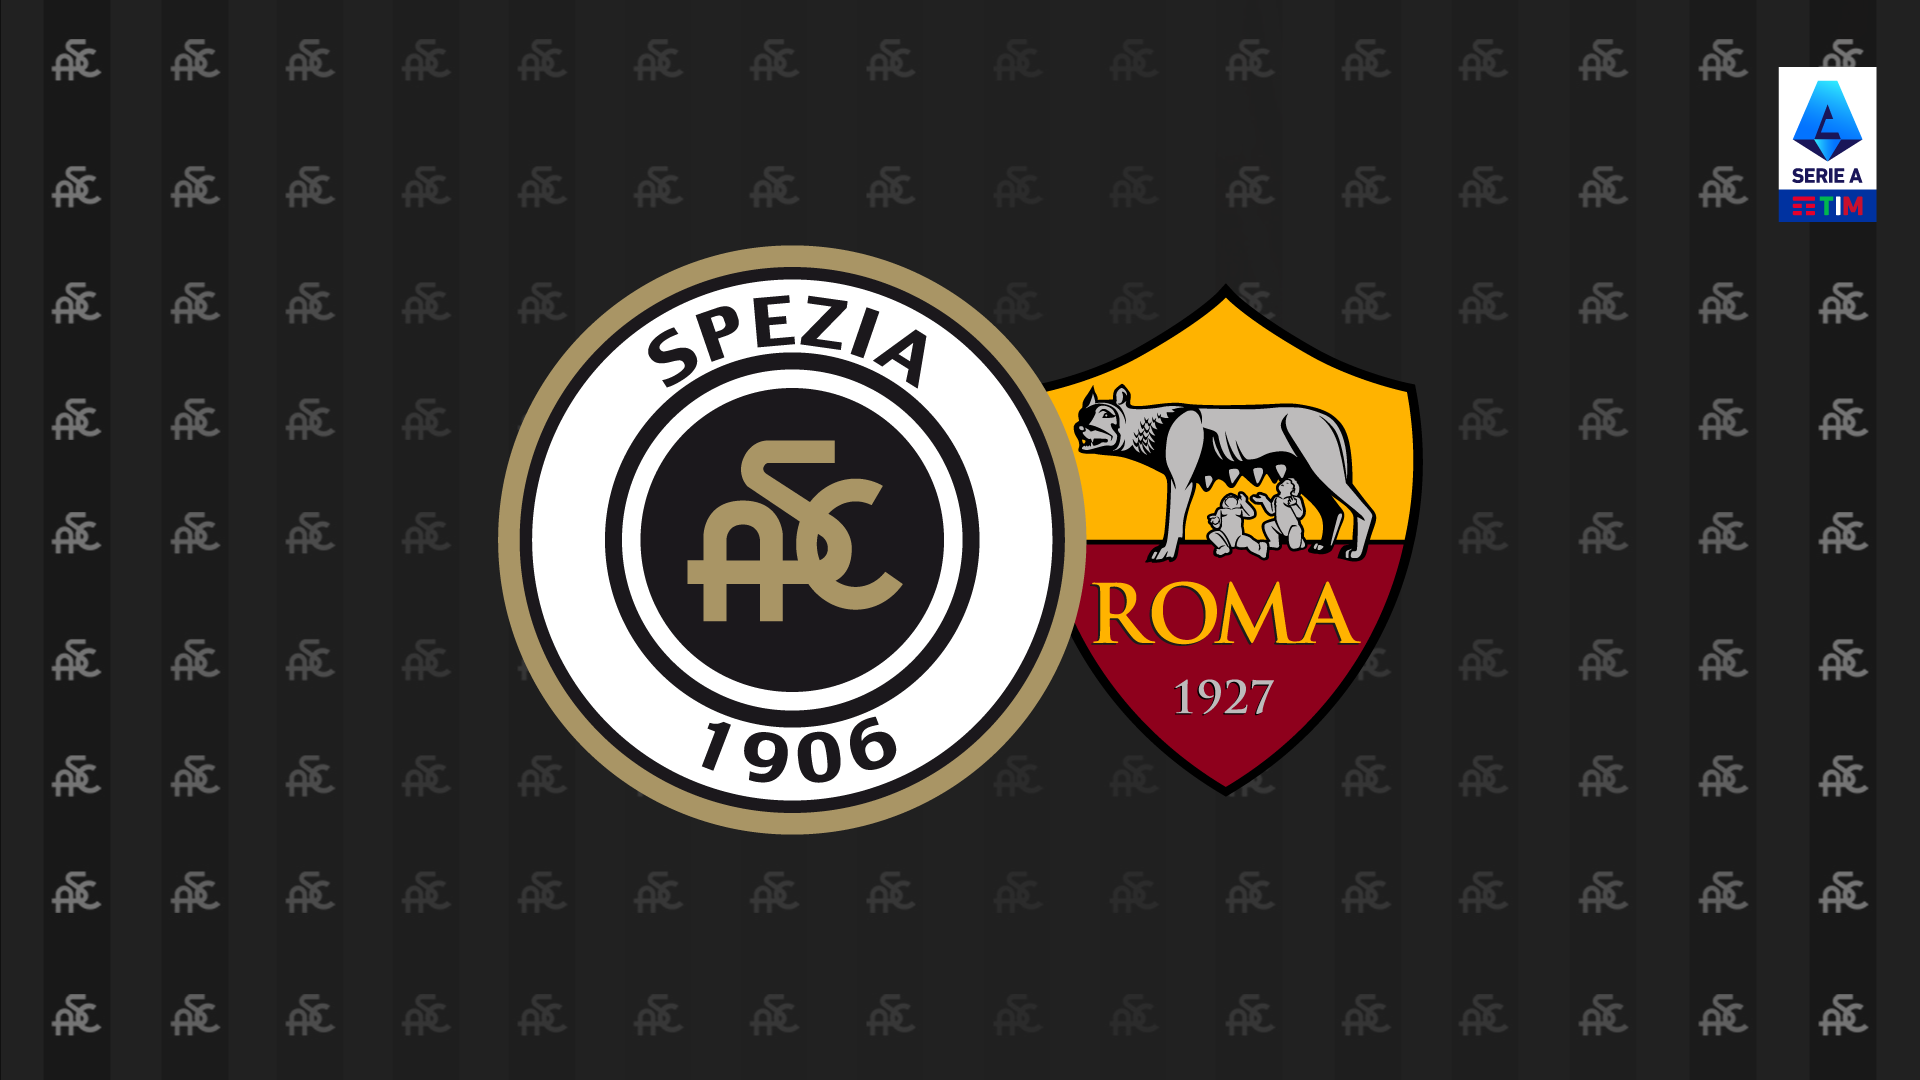 Spezia-Roma: free sale available